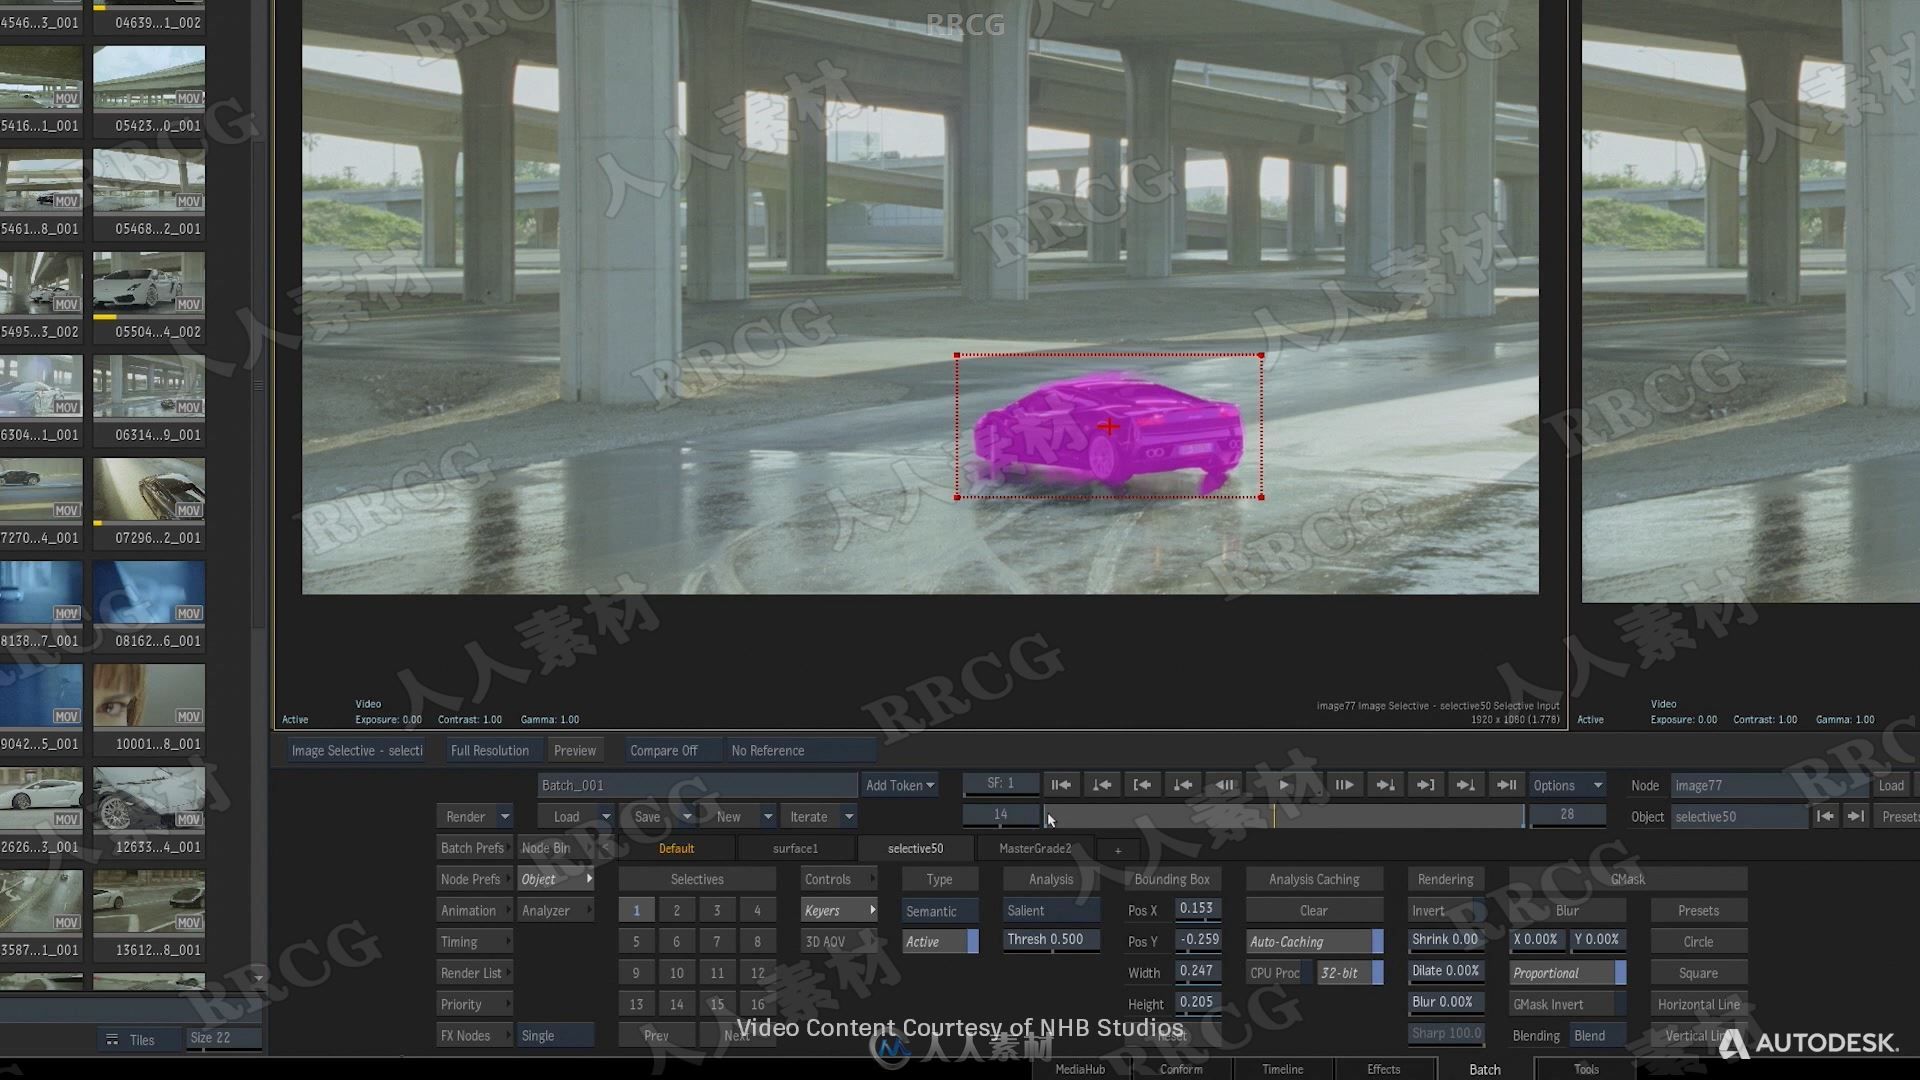 Autodesk Flame高端电影剪辑和特效制作软件V2025.0.1 Mac版